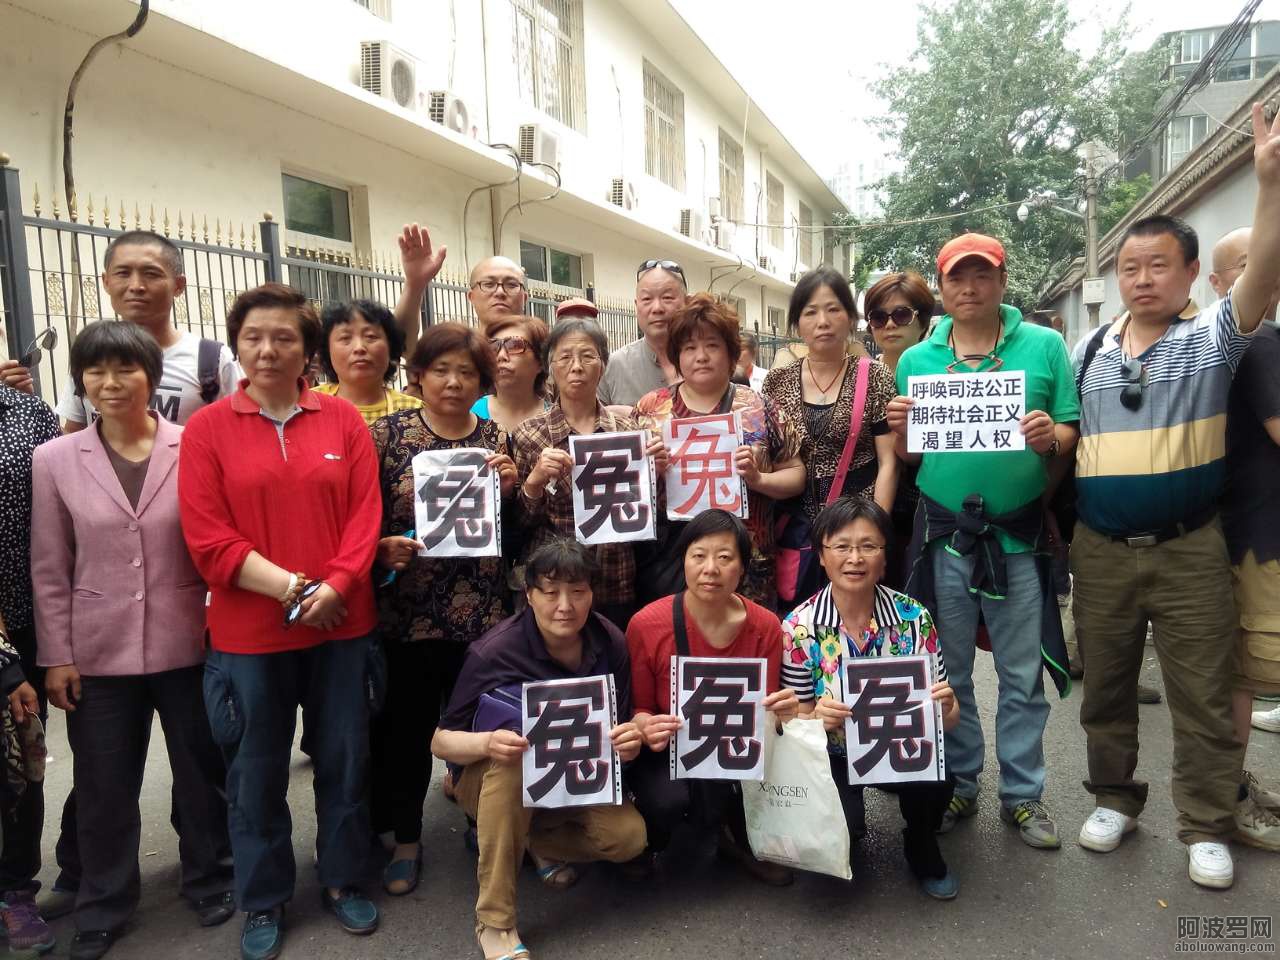 G上海1308人集访党中央，不被截访不被登记，与徐纯合案有关？